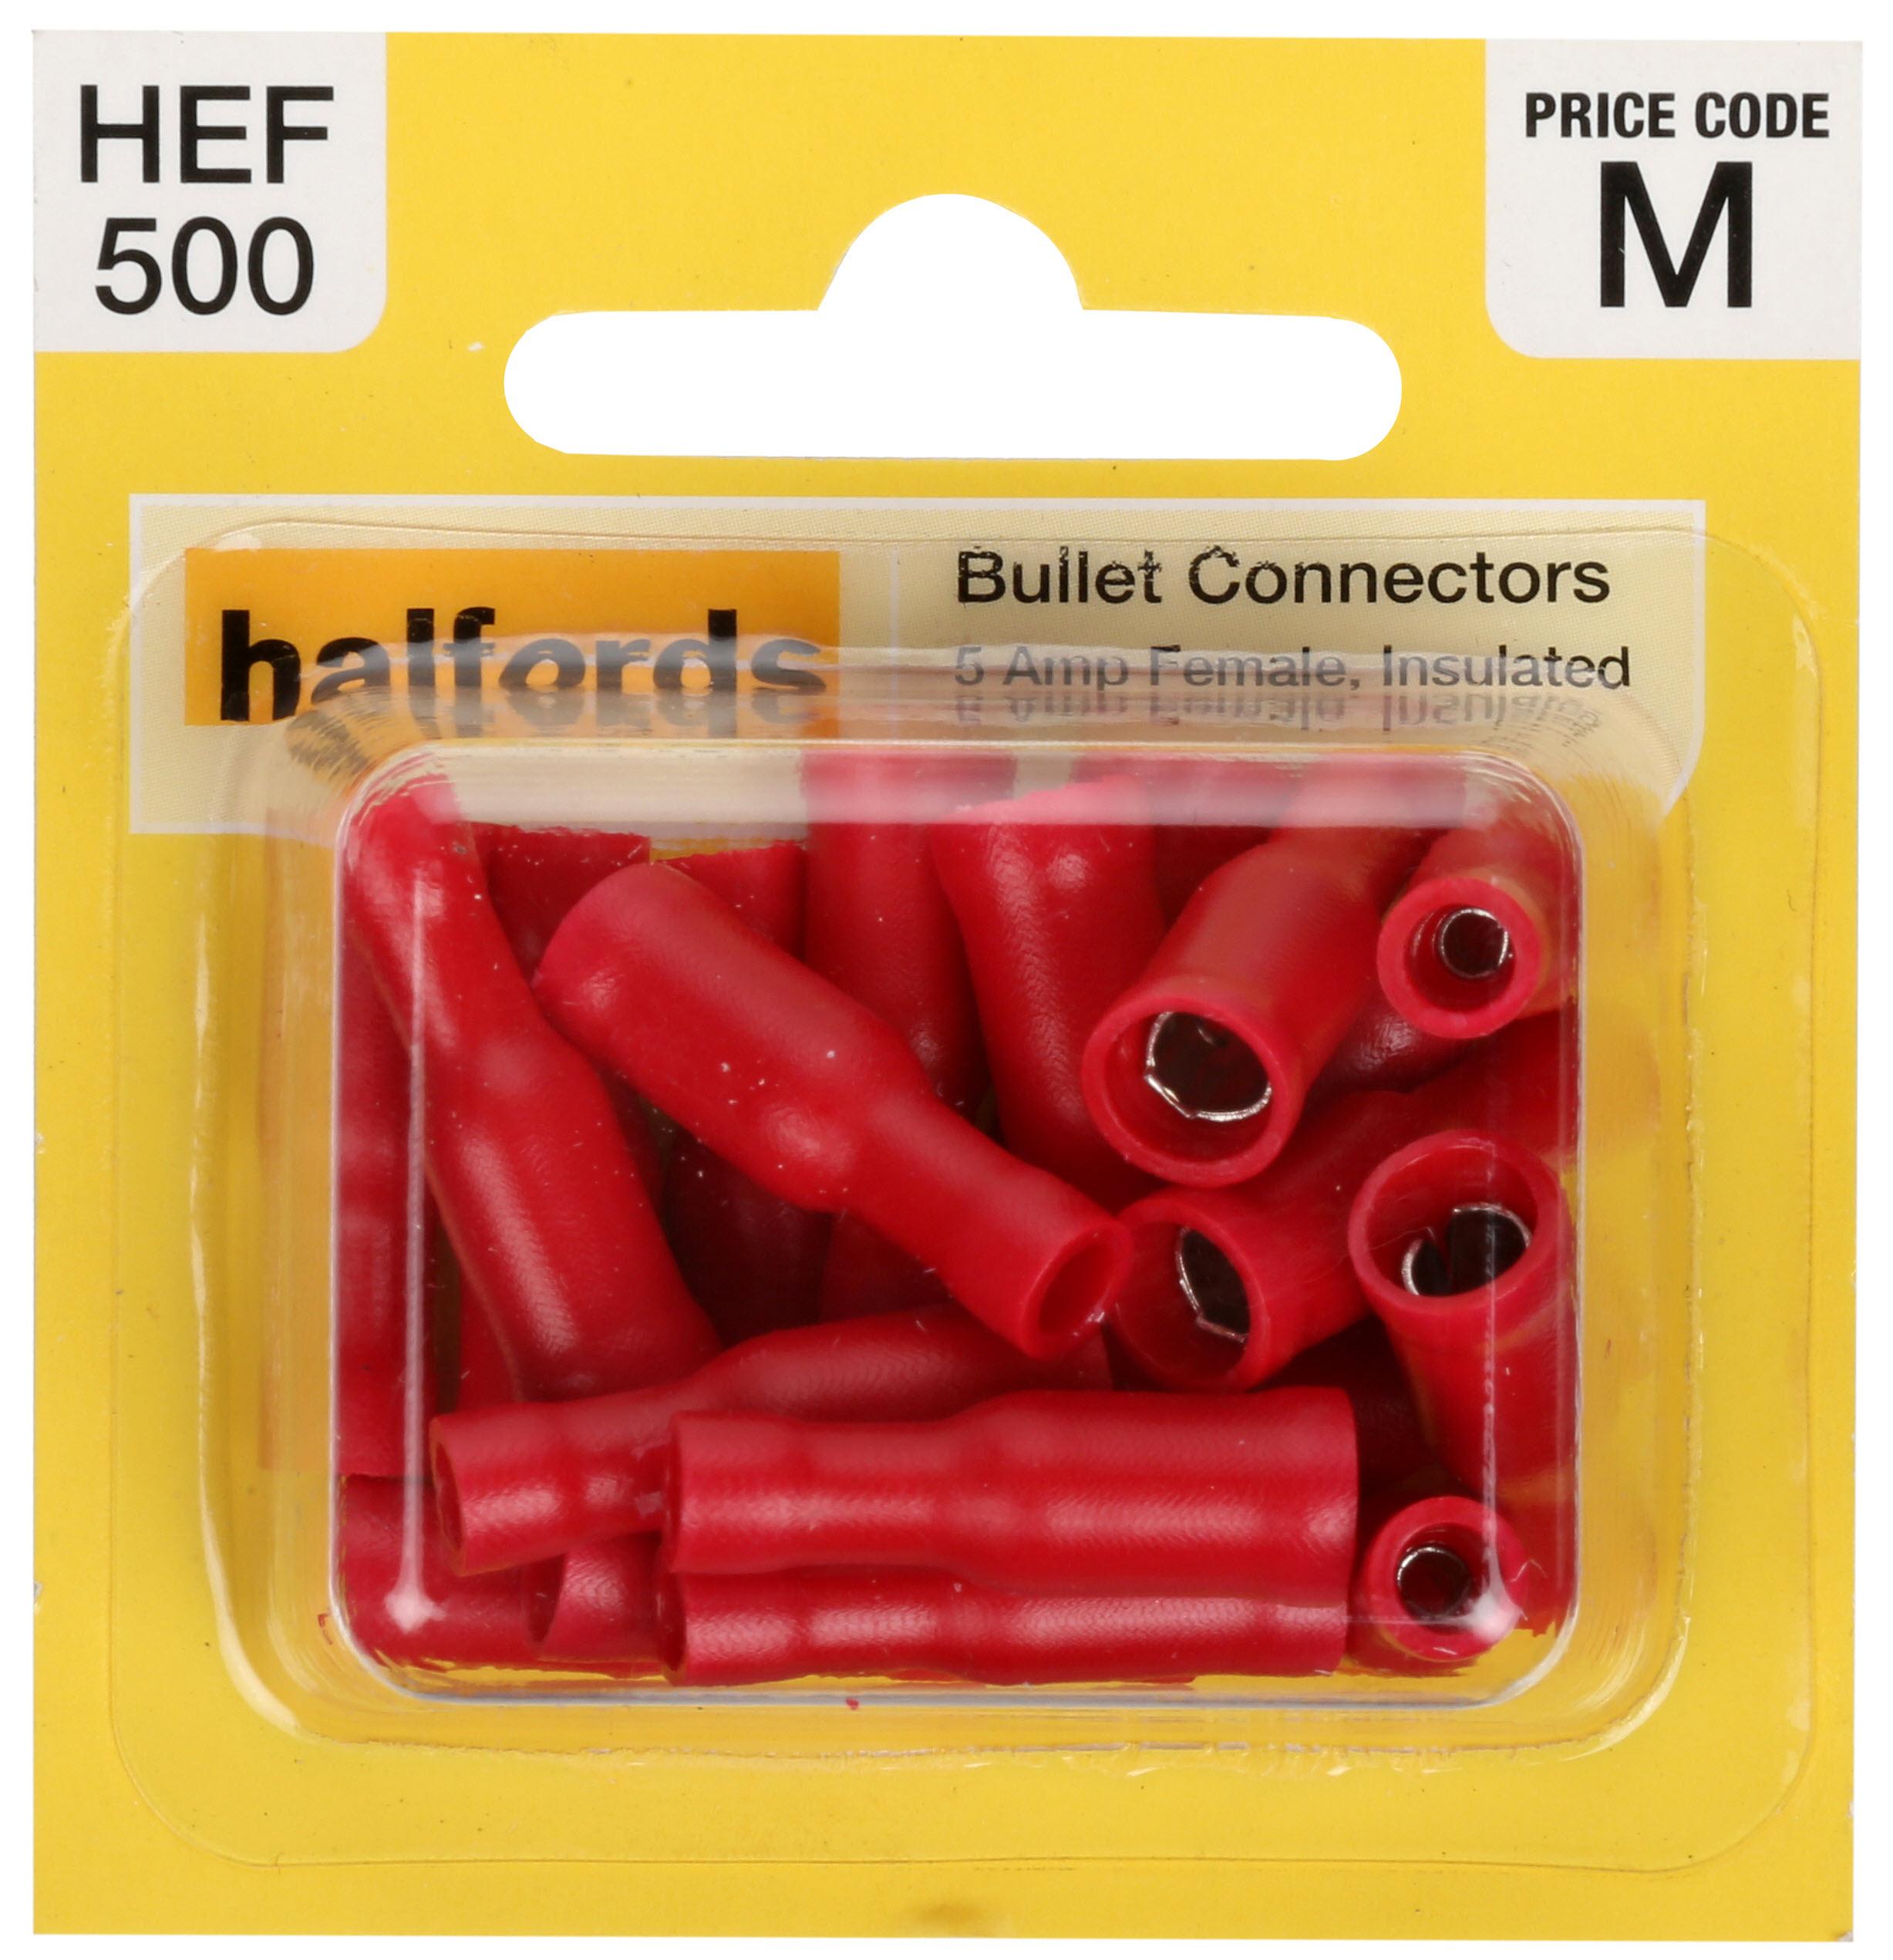 Halfords Bullet Connectors (Hef500) 5 Amp/Female